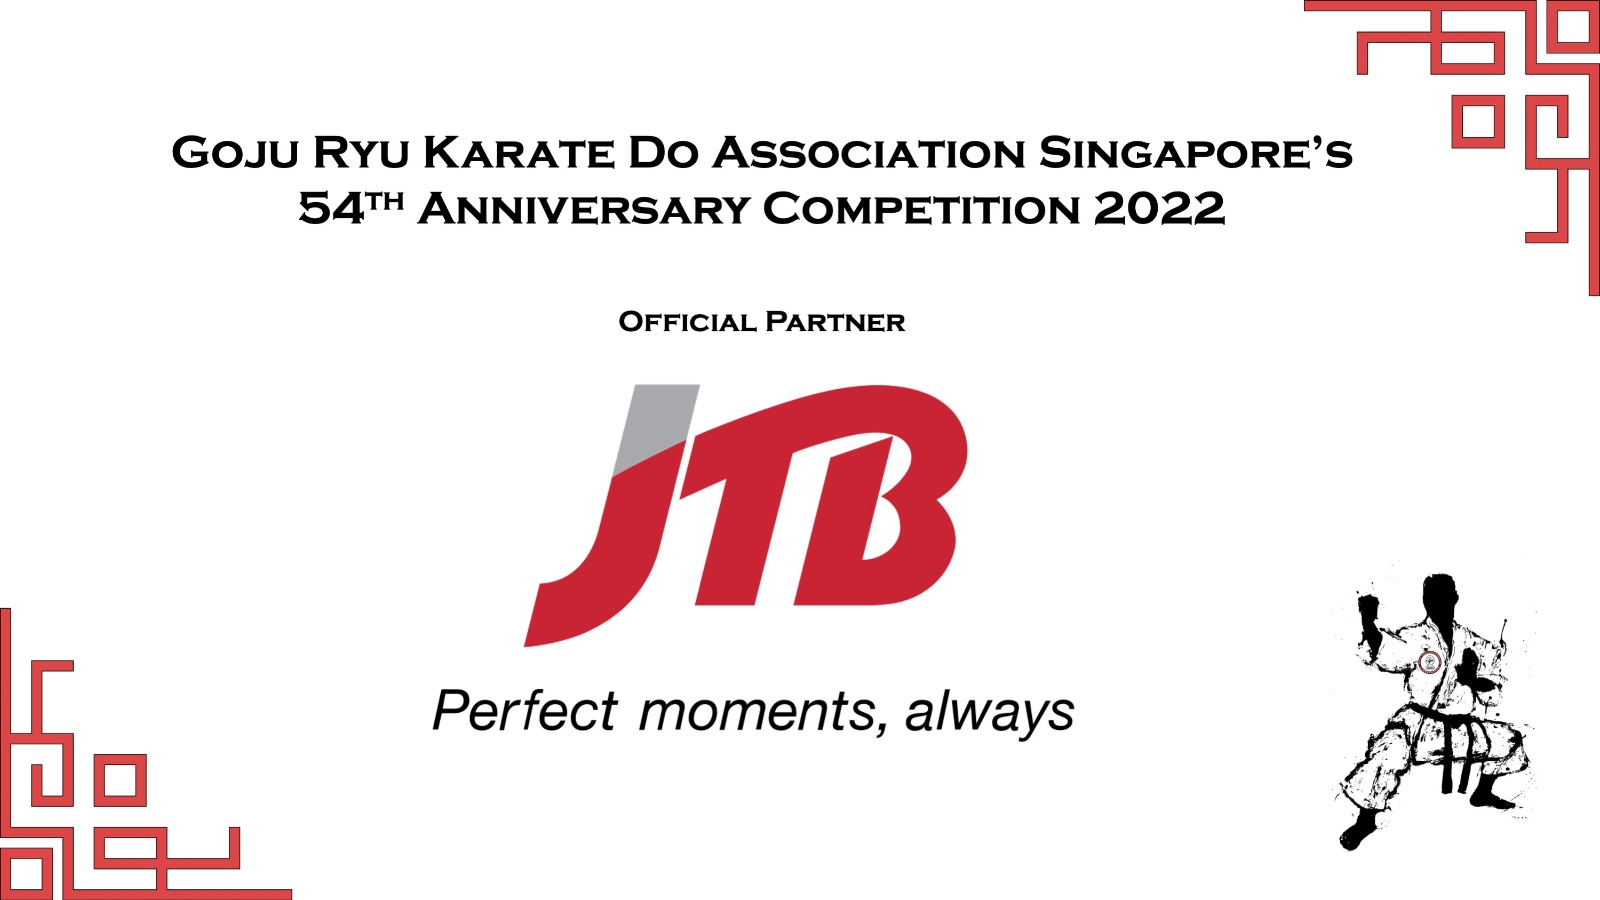 JTB sponsorship